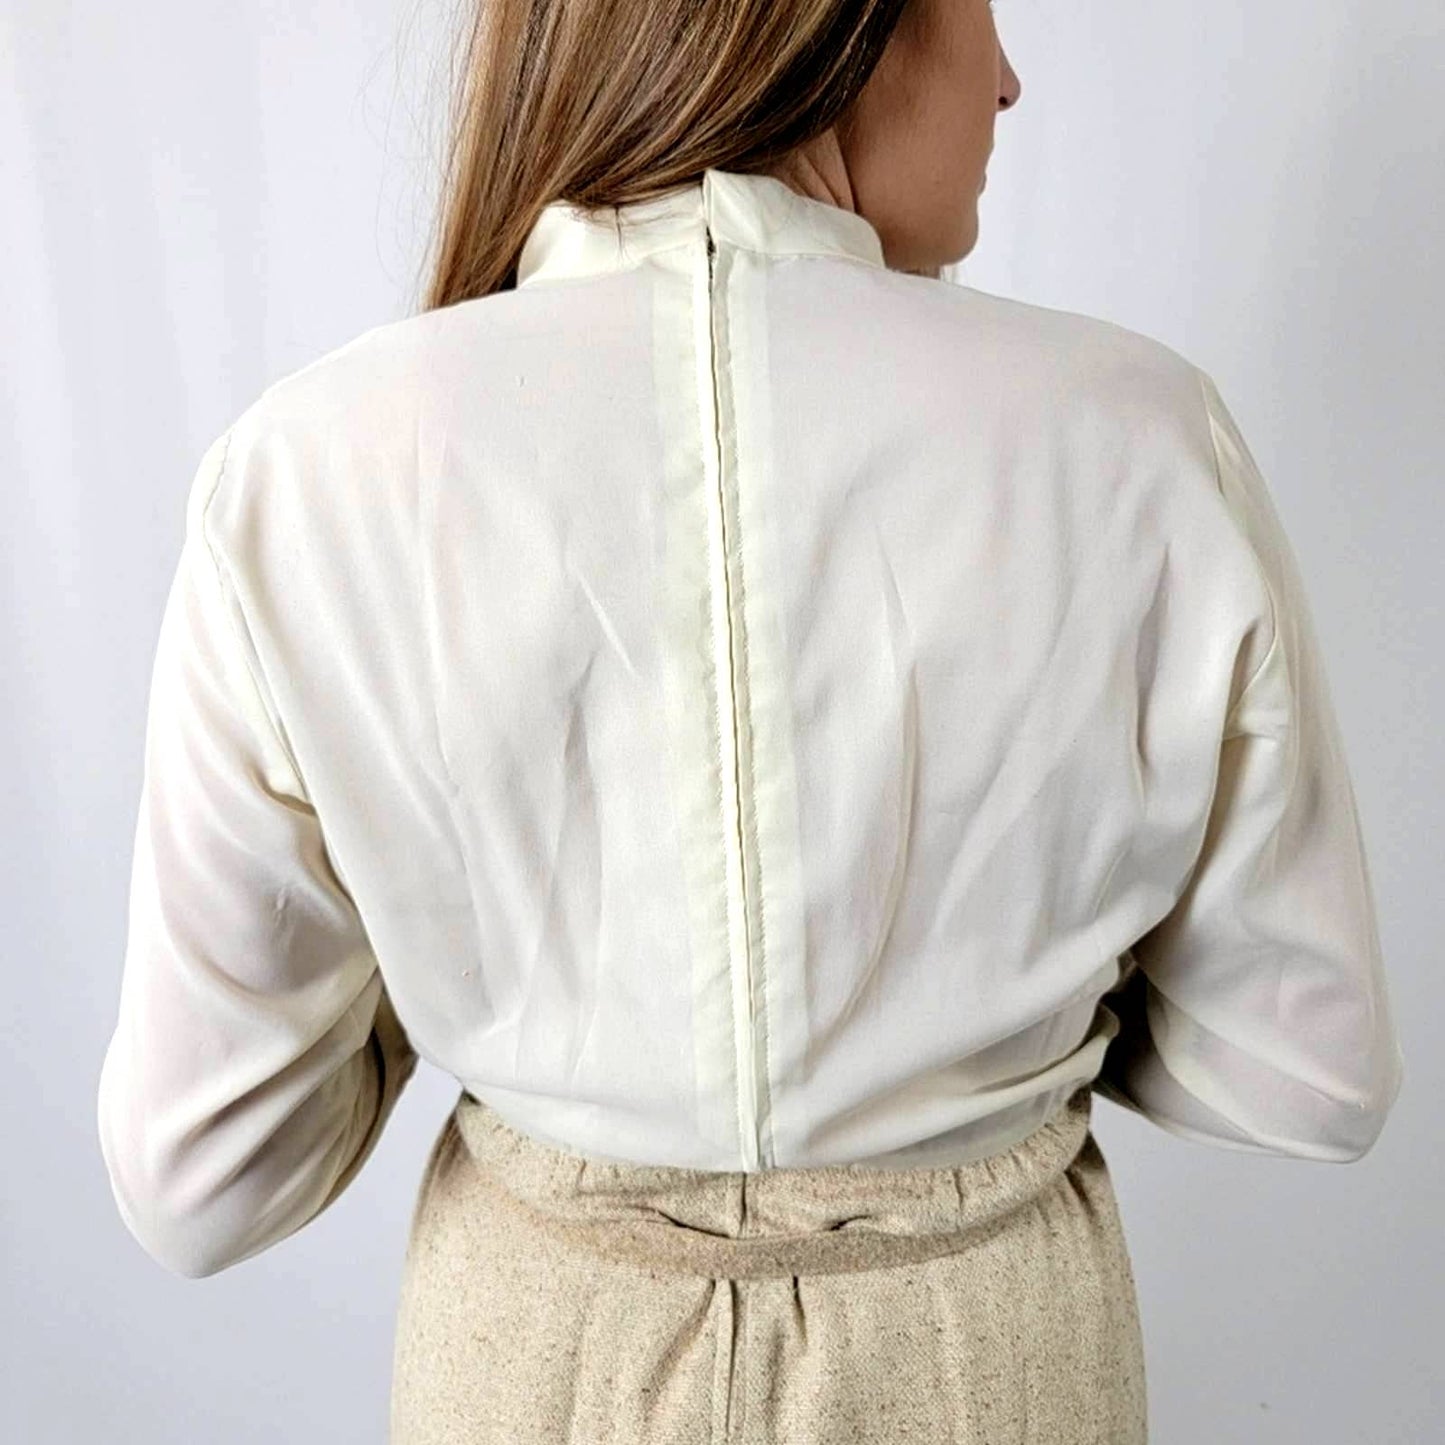 Vintage 60s Dress With Jacket Set by Villano Gerardo - L